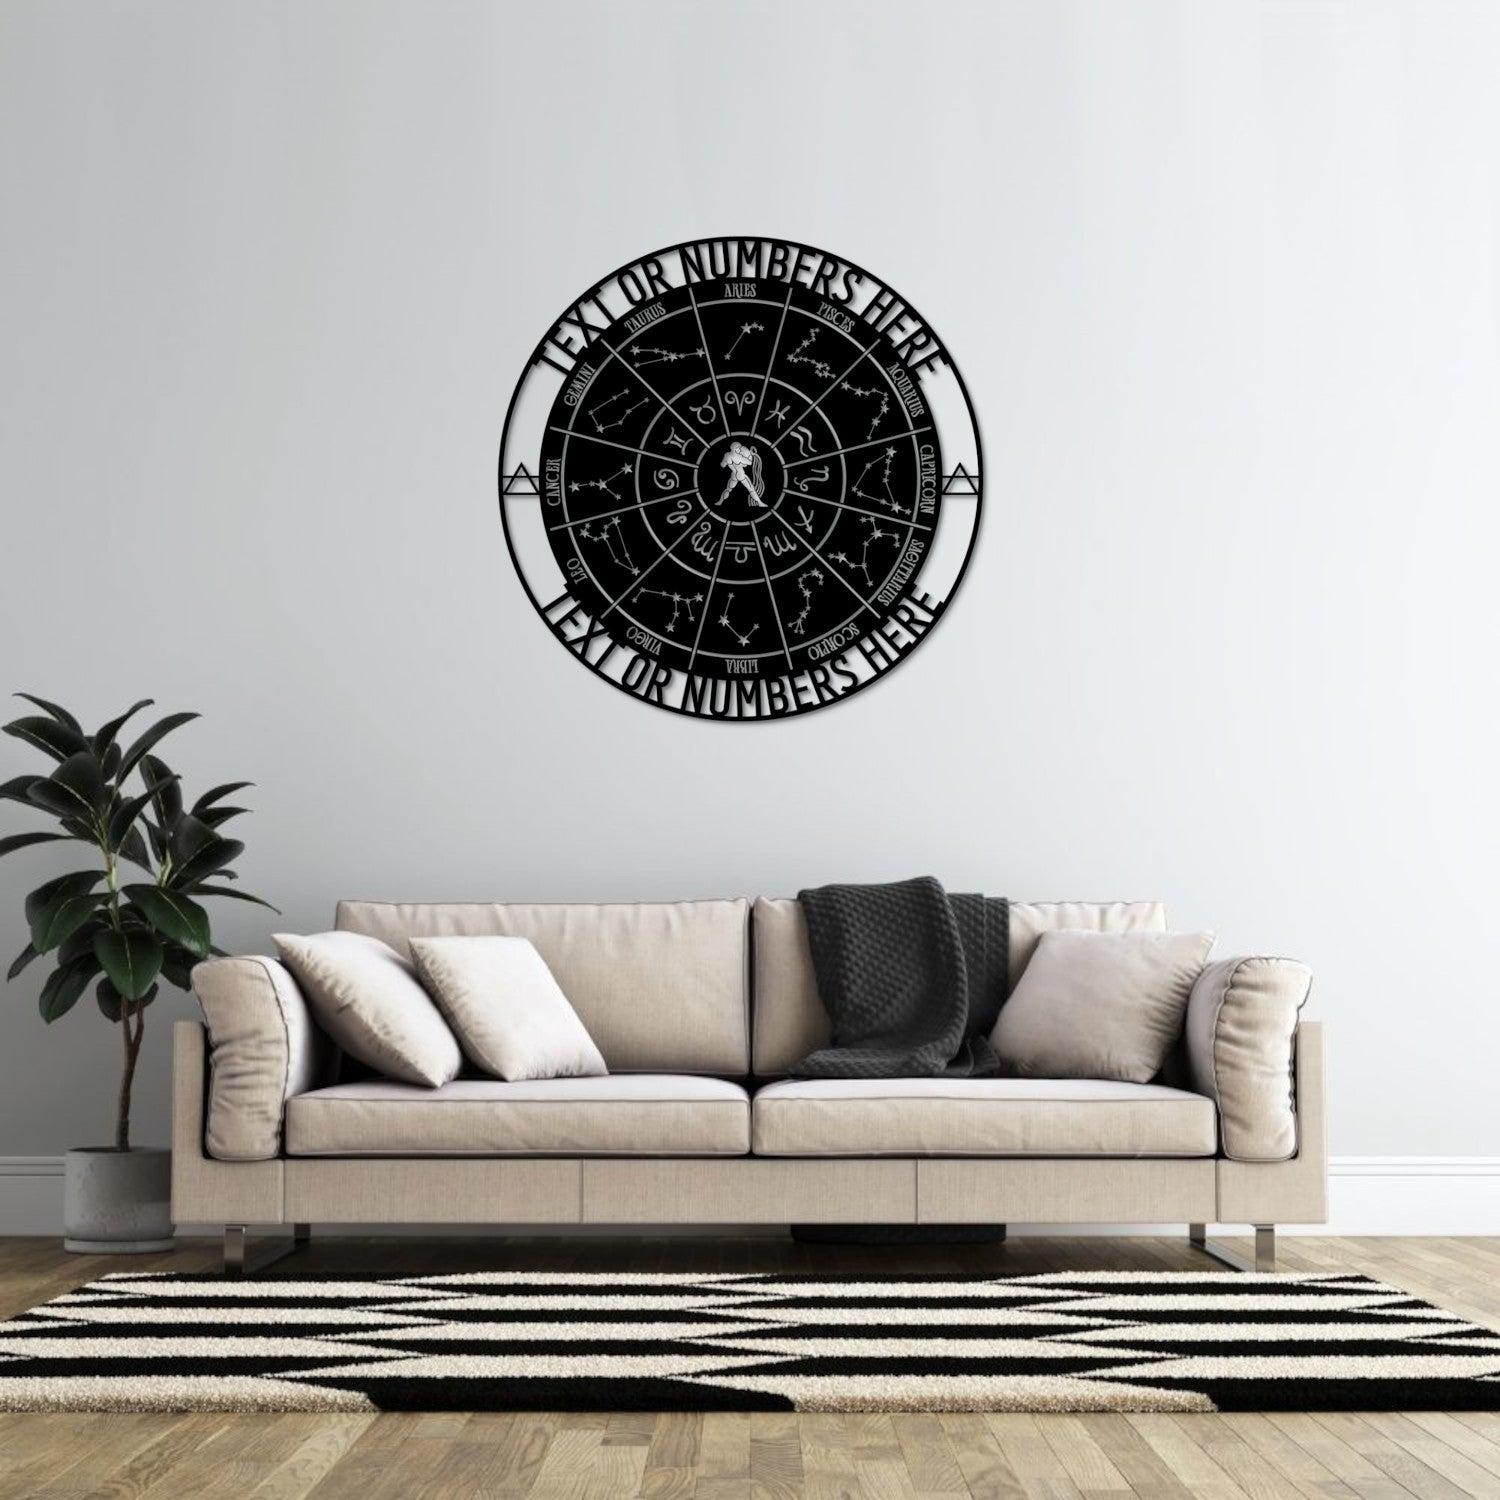 Personalized Aquarius Zodiac Wheel Metal Sign | Custom Made Astrology Wall Decor | Celestial Gifts | Decorative Aquarius Star Sign Hanging